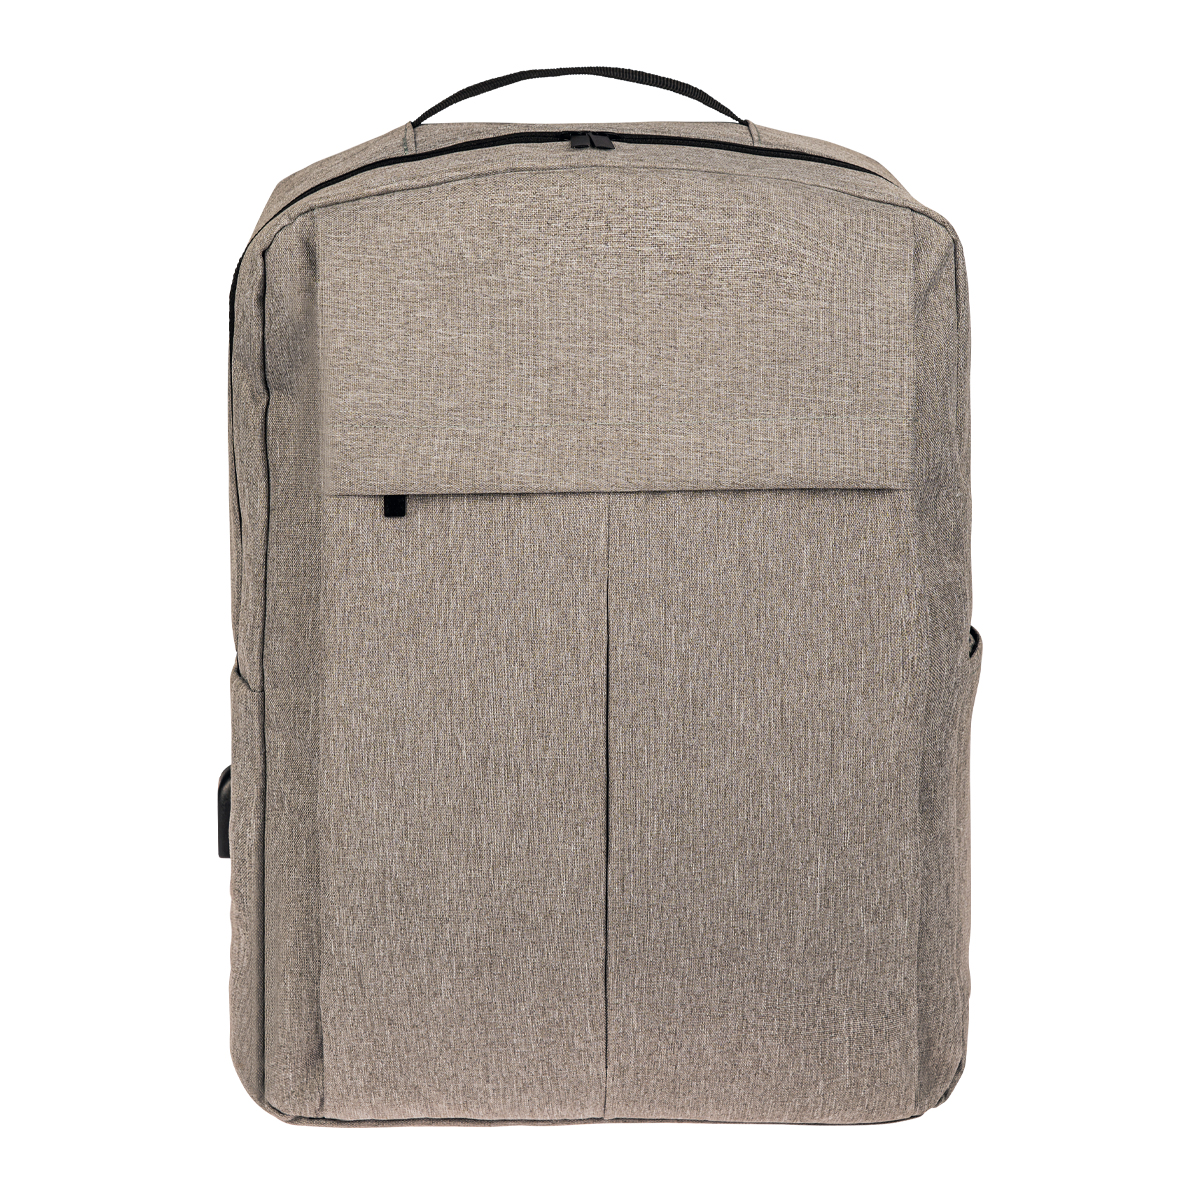 Lancaster Laptop Backpack Product Image